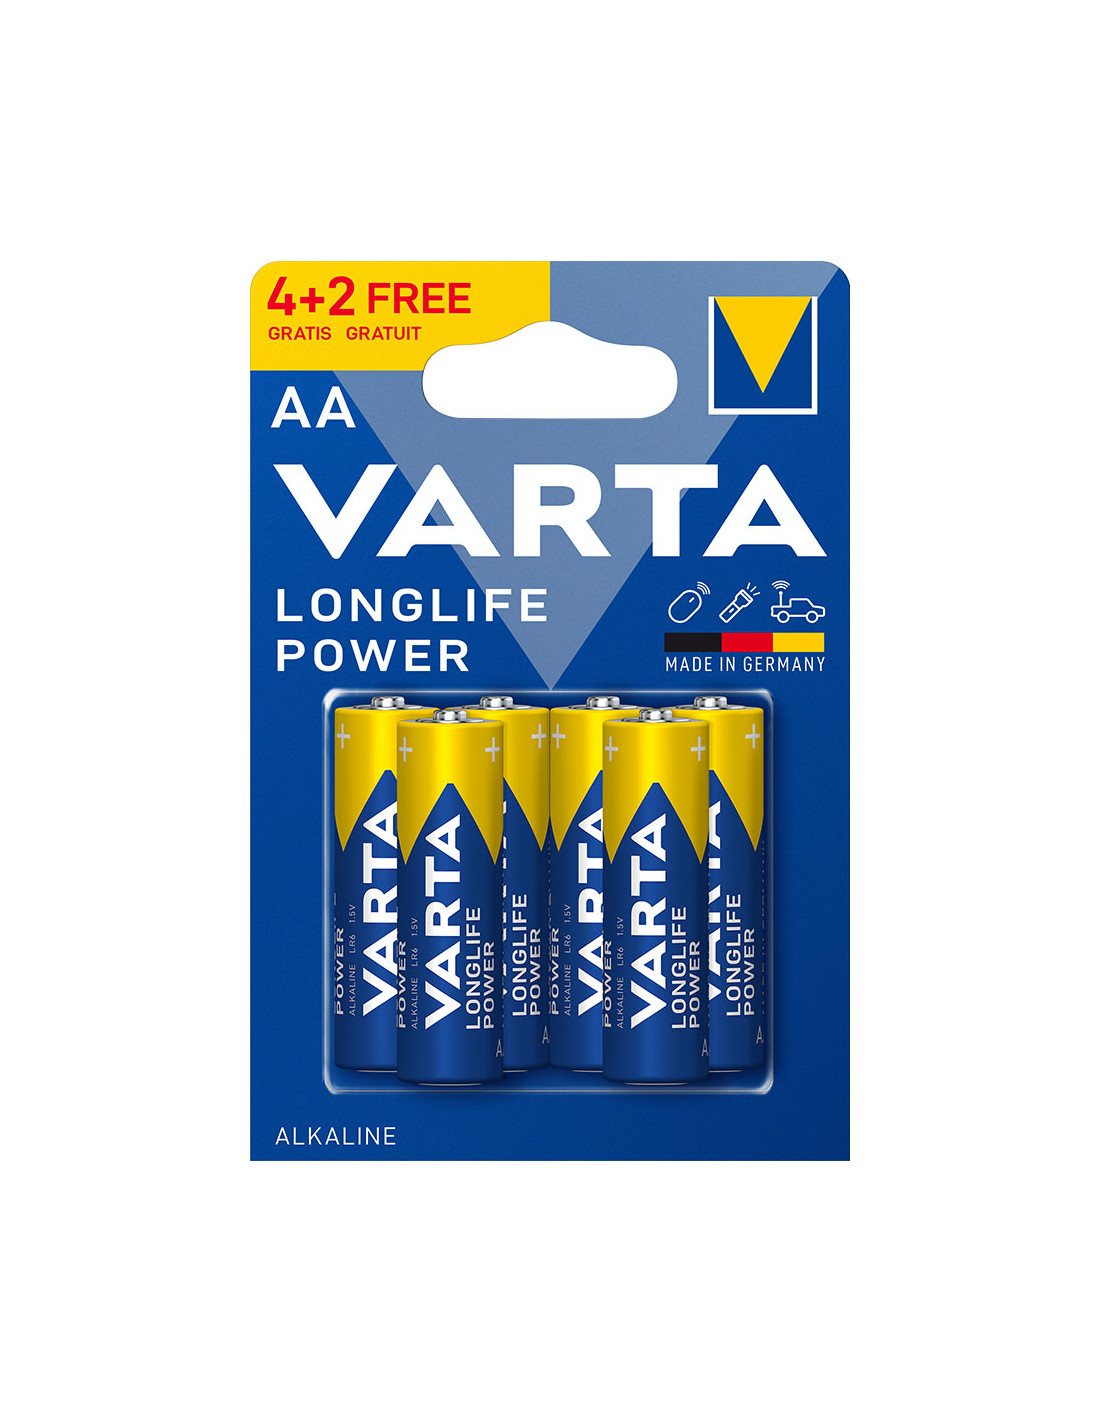 VARTA LONGLIFE POWER PILE ALCALINE AA/LR06 6+2 GRATUITES 1.5V